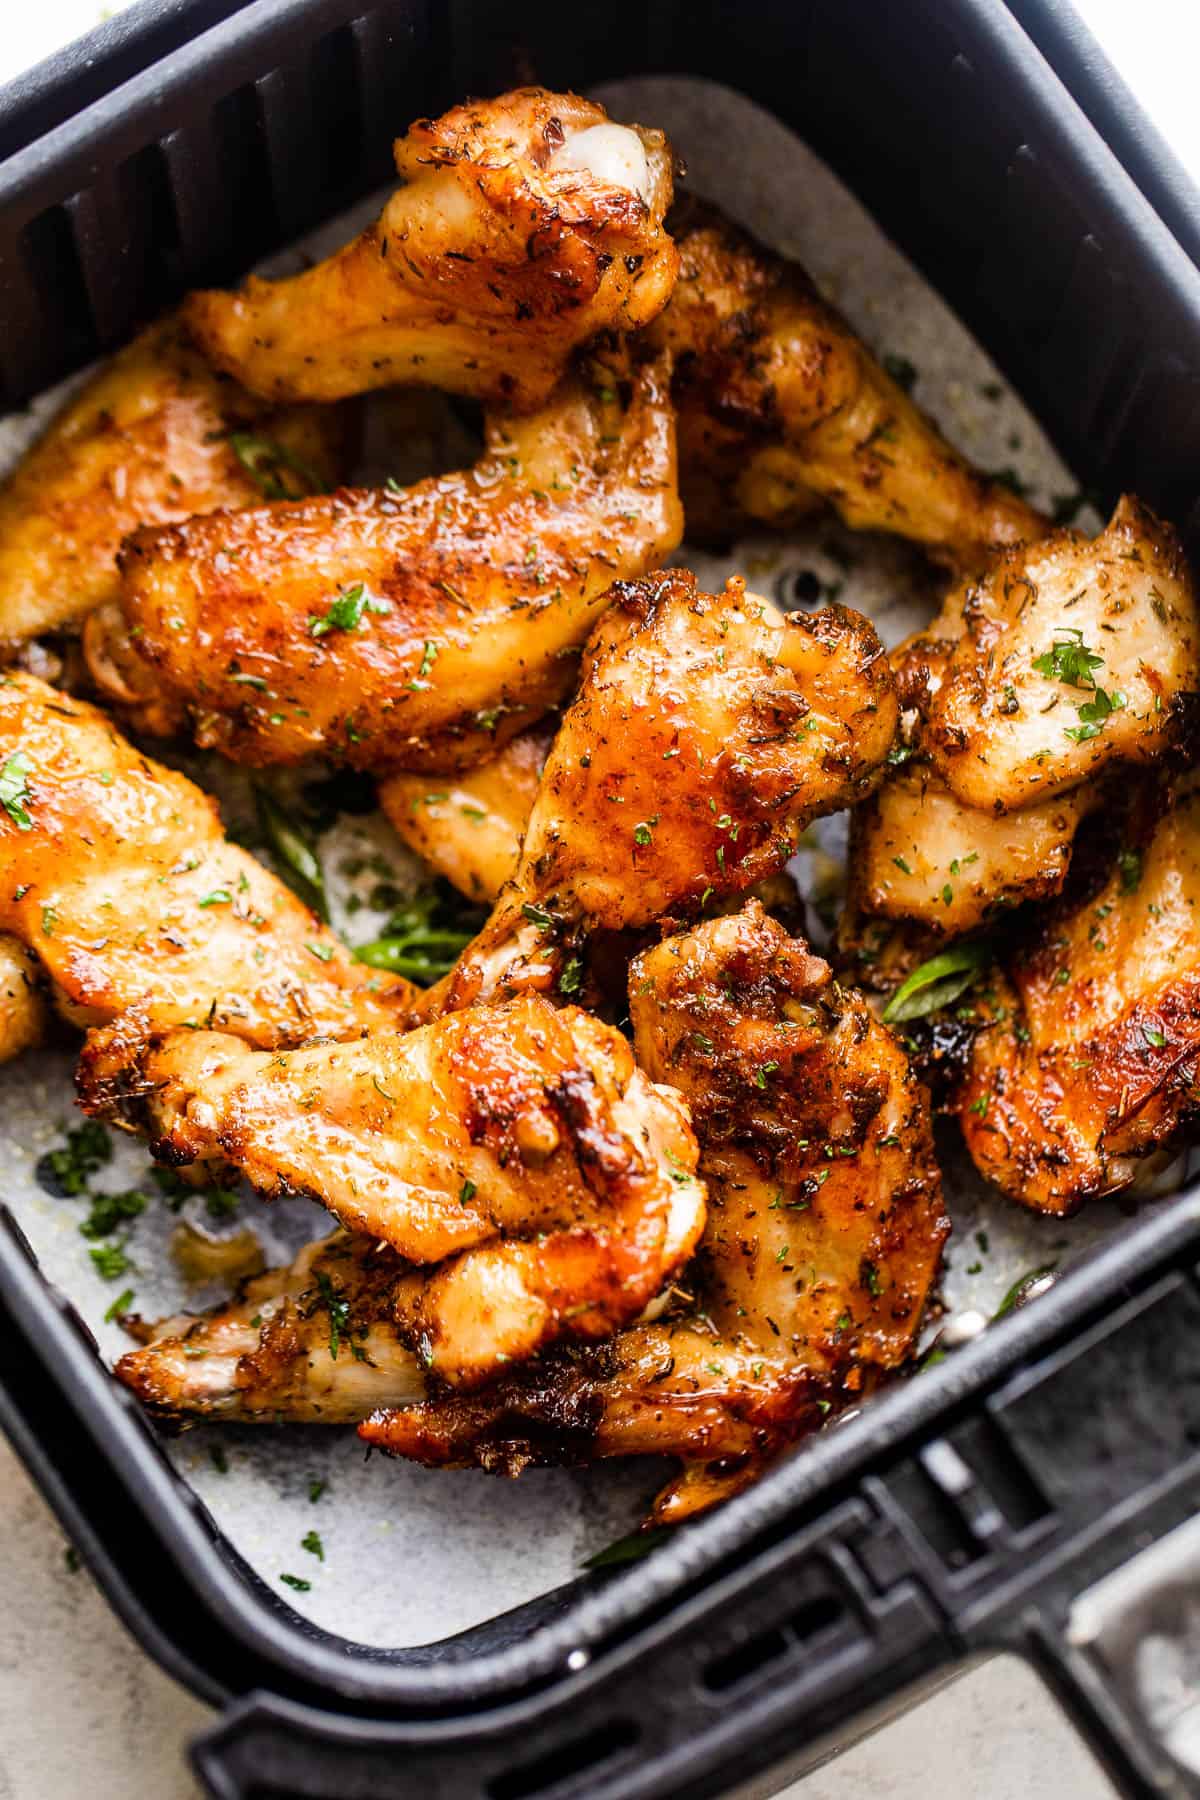 cooked chicken wings in air fryer basket